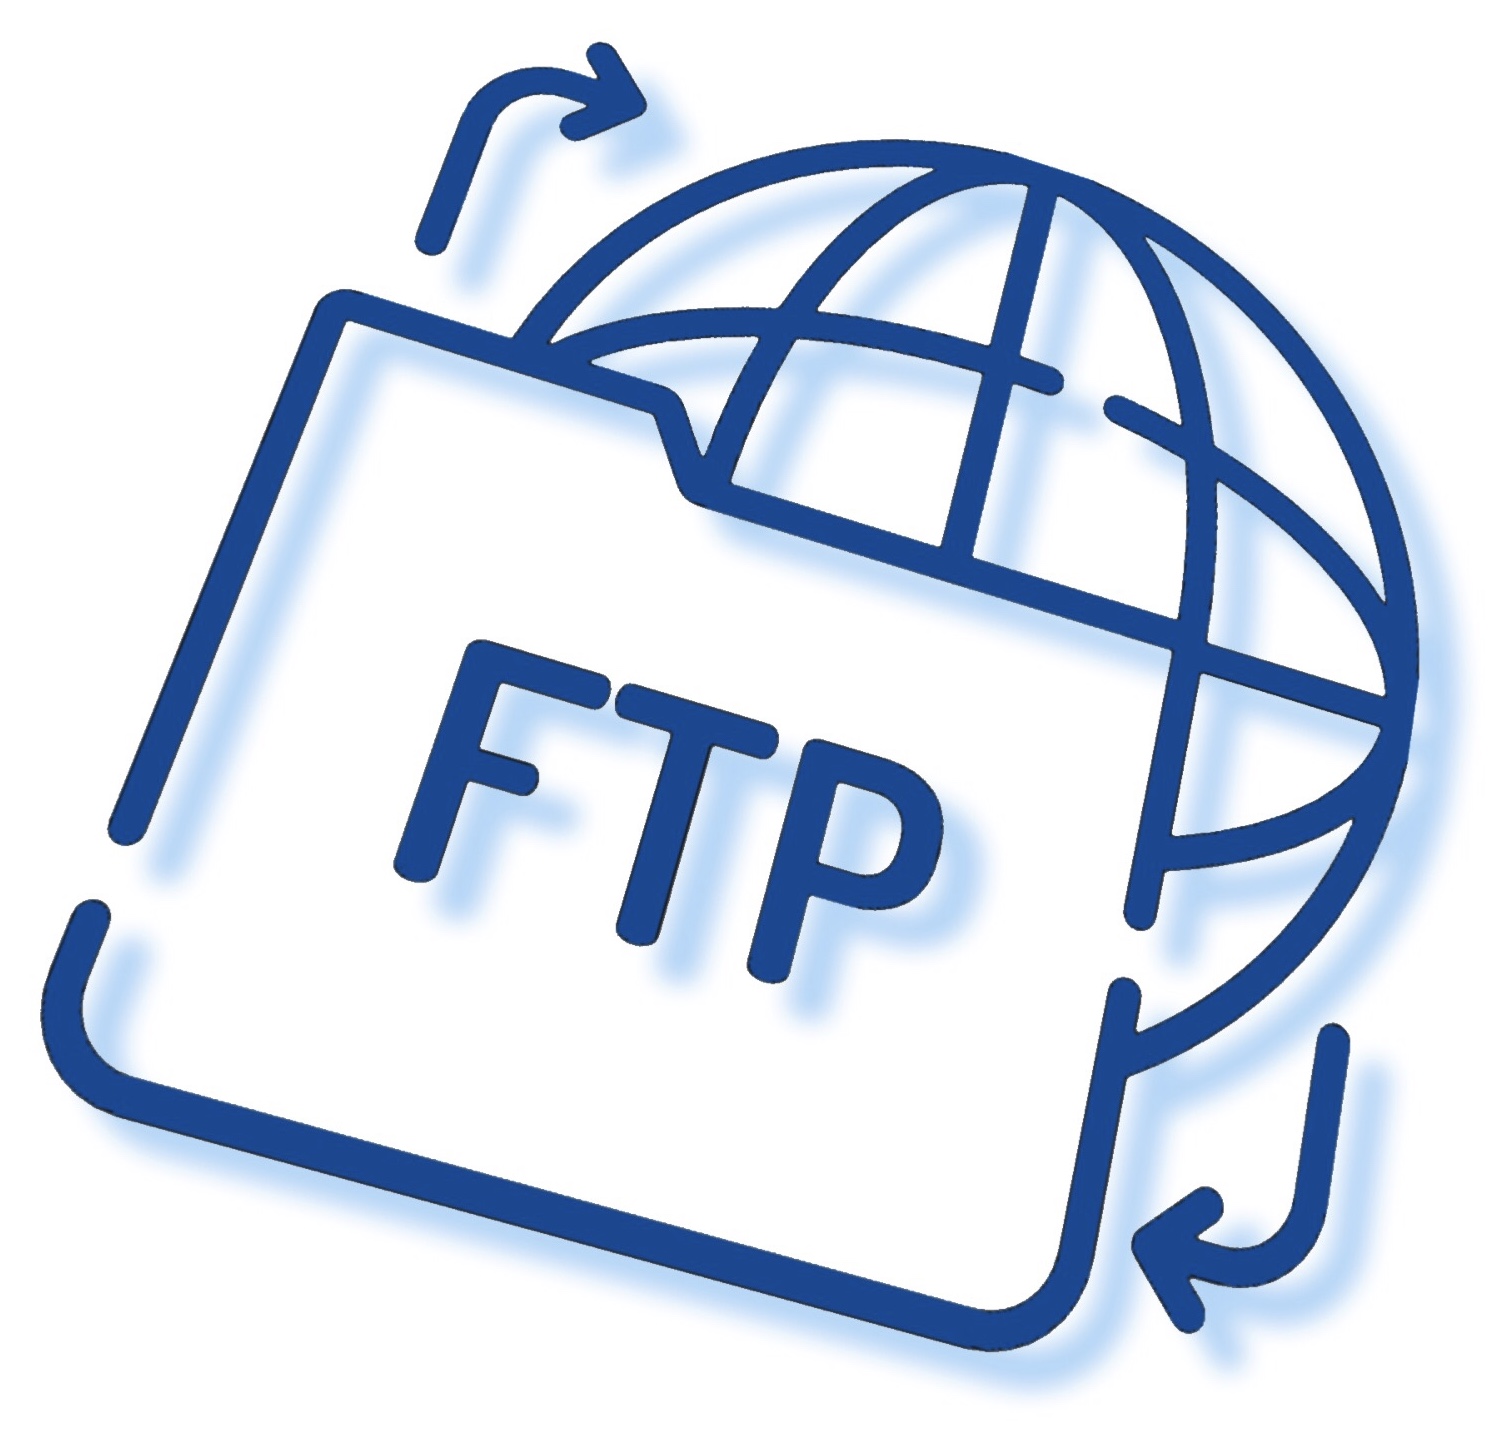 ftp hosting